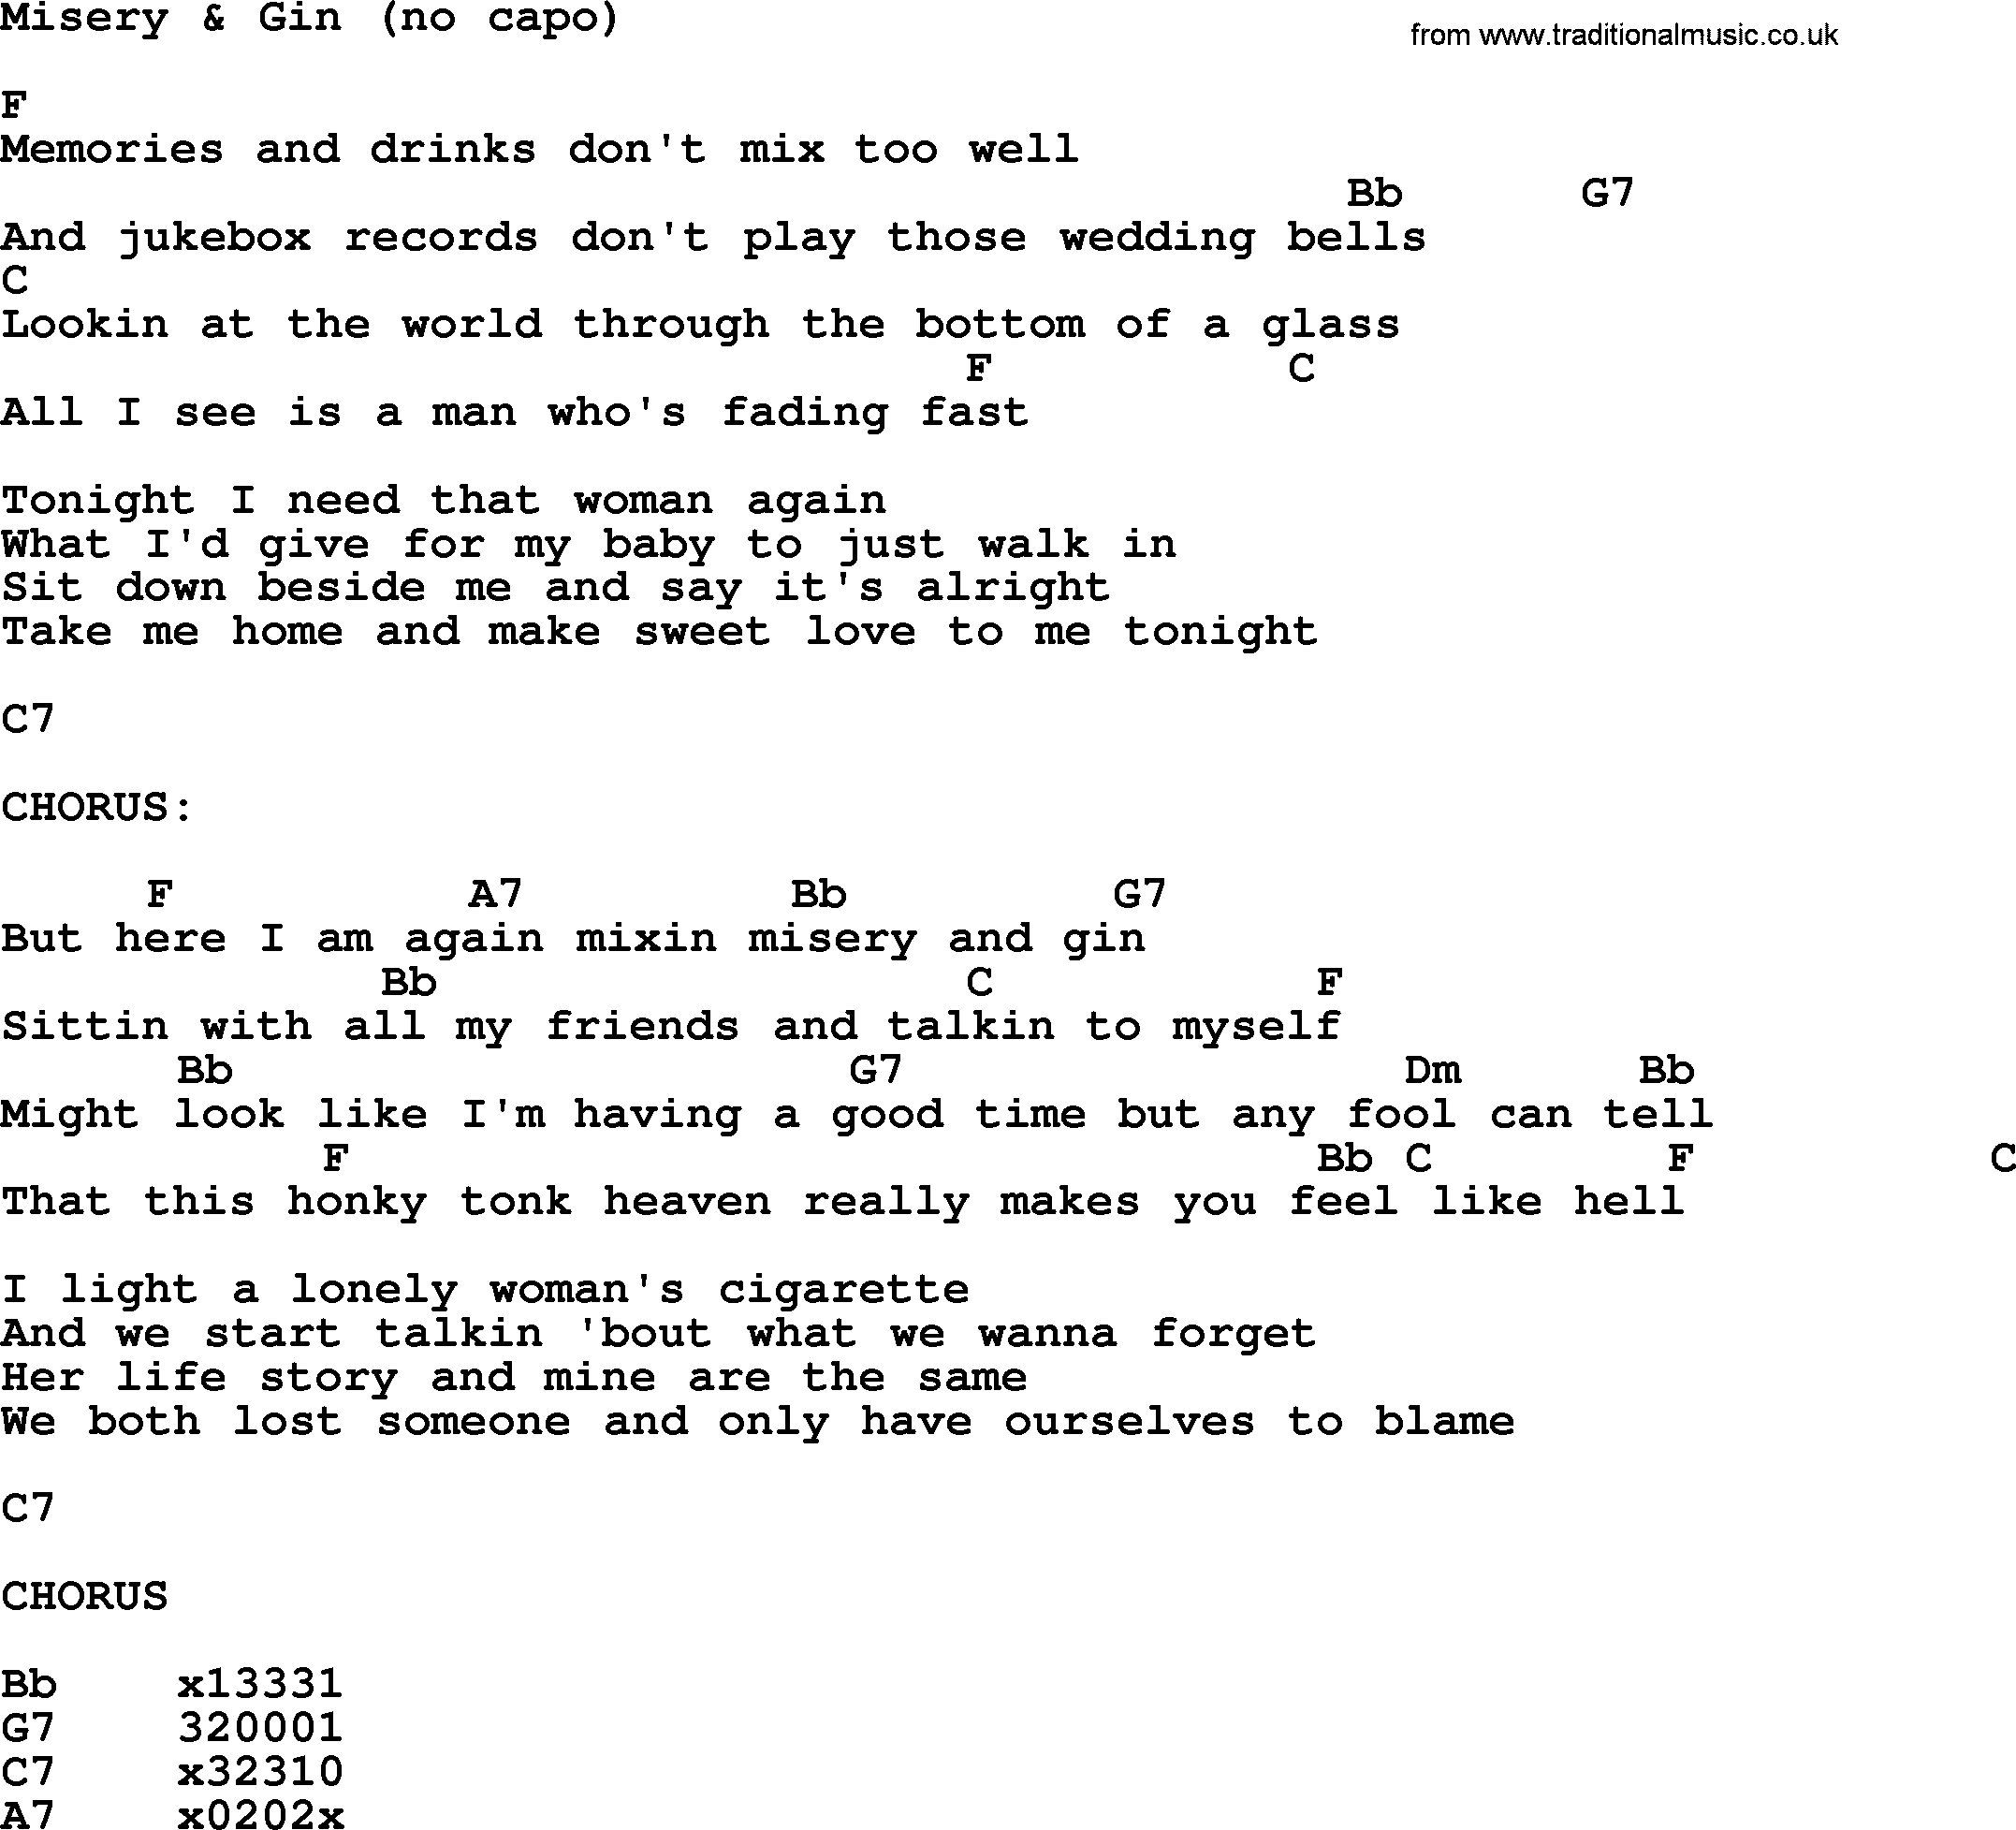 Merle Haggard song: Misery and Gin (no capo), lyrics and chords